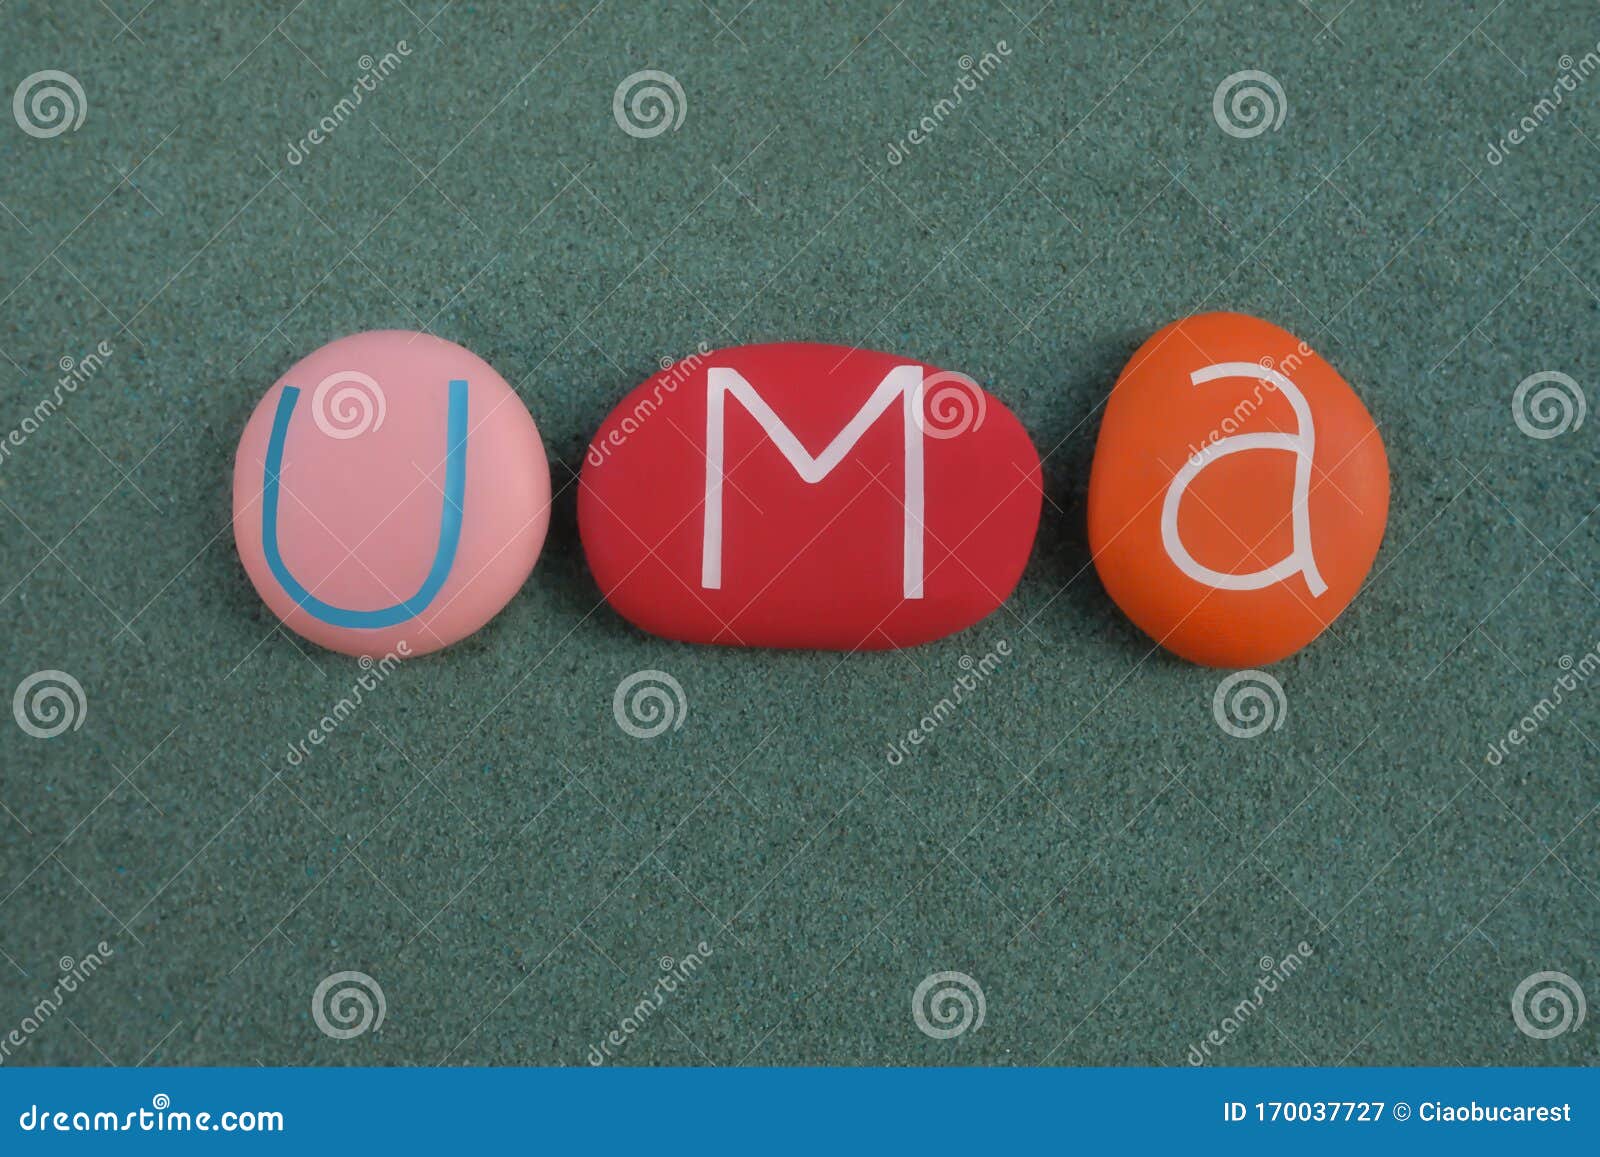 Uma, Female Given Name Composed with Multi Colored Stone Letters ...